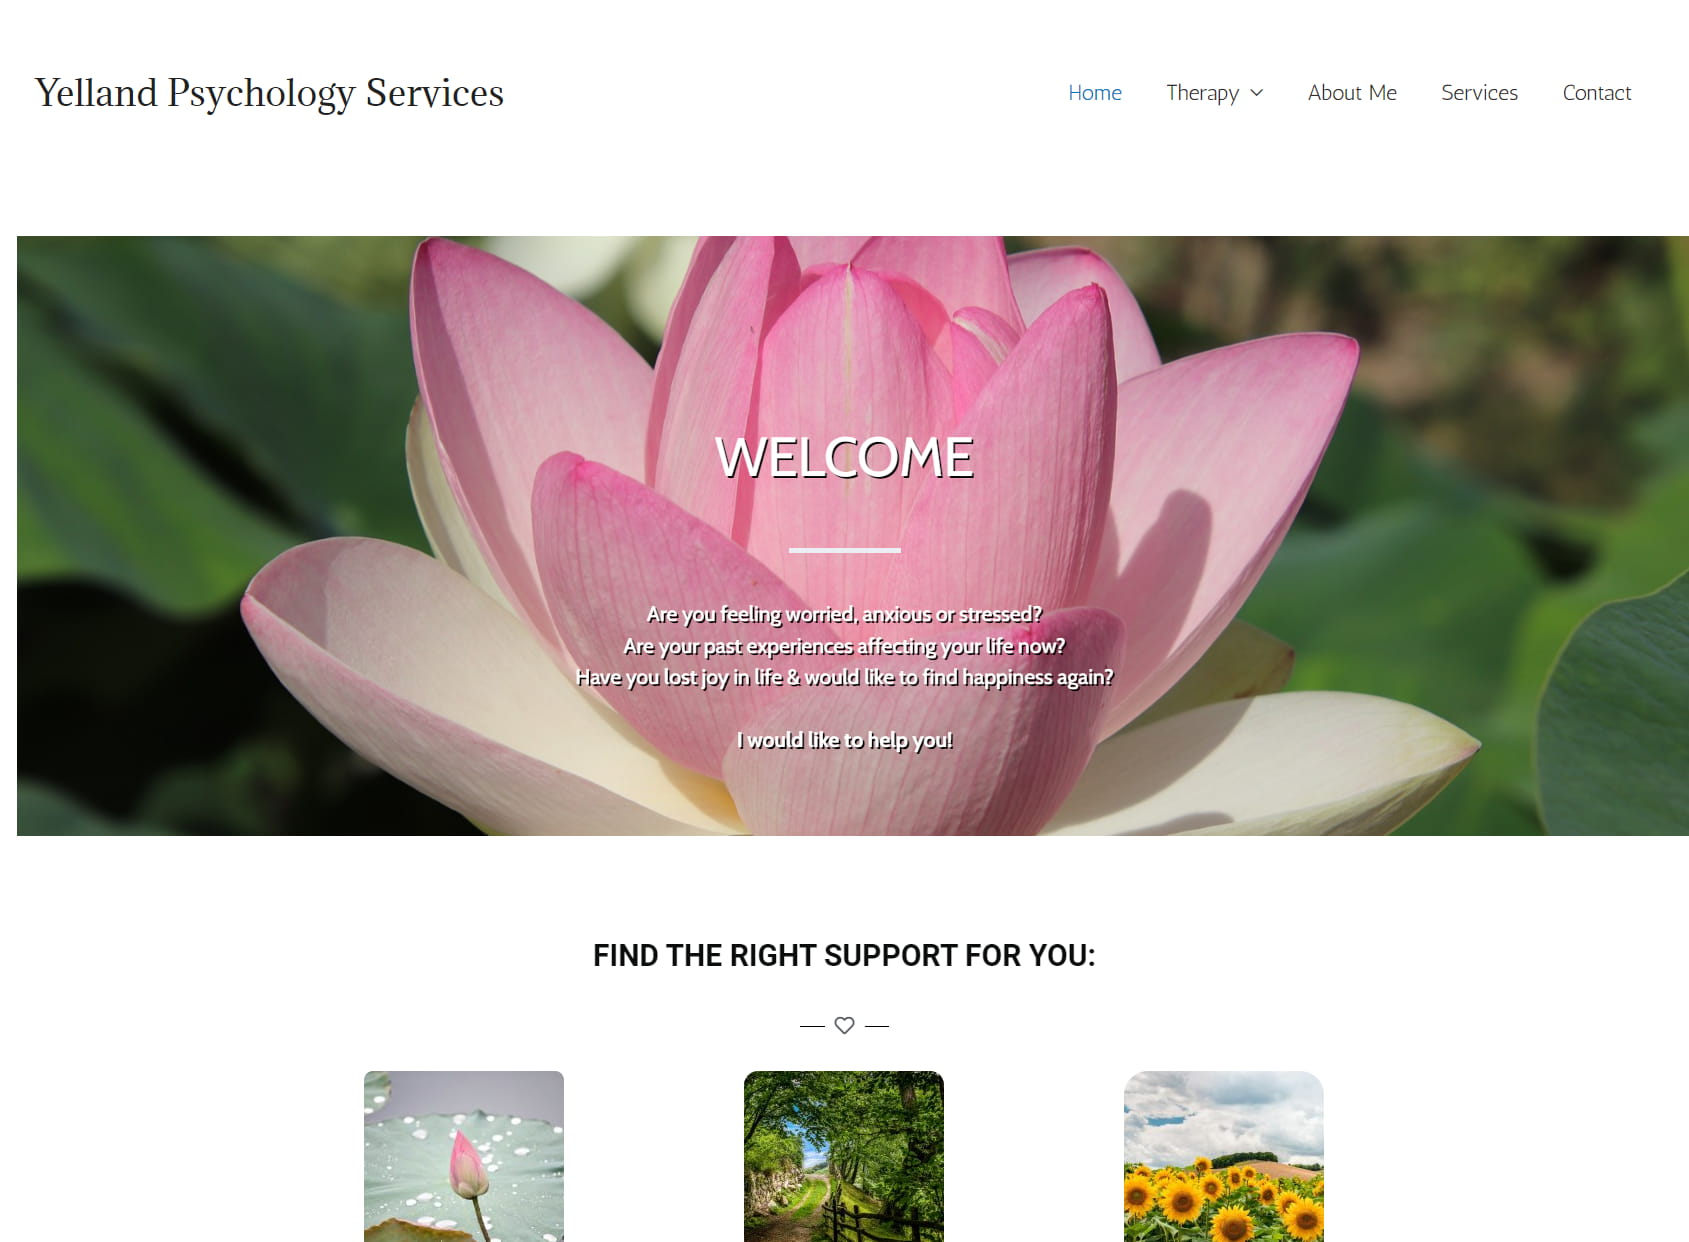 Yelland Psychology Services Ltd